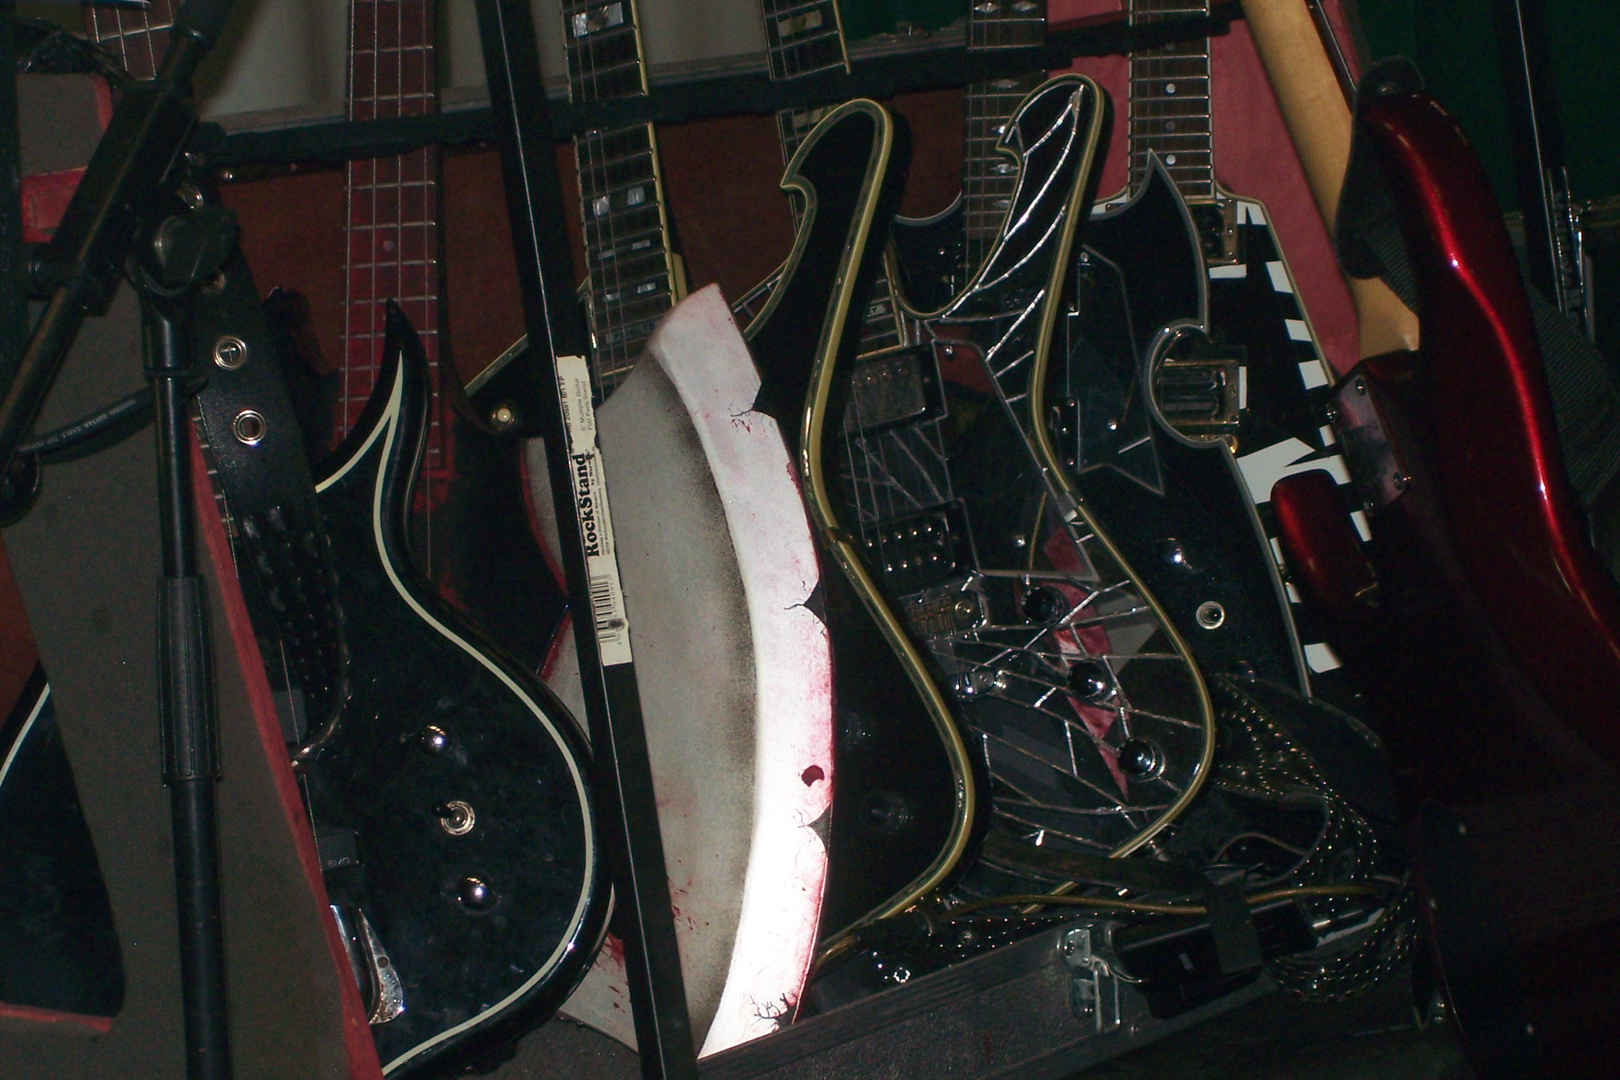 Guitars in waiting